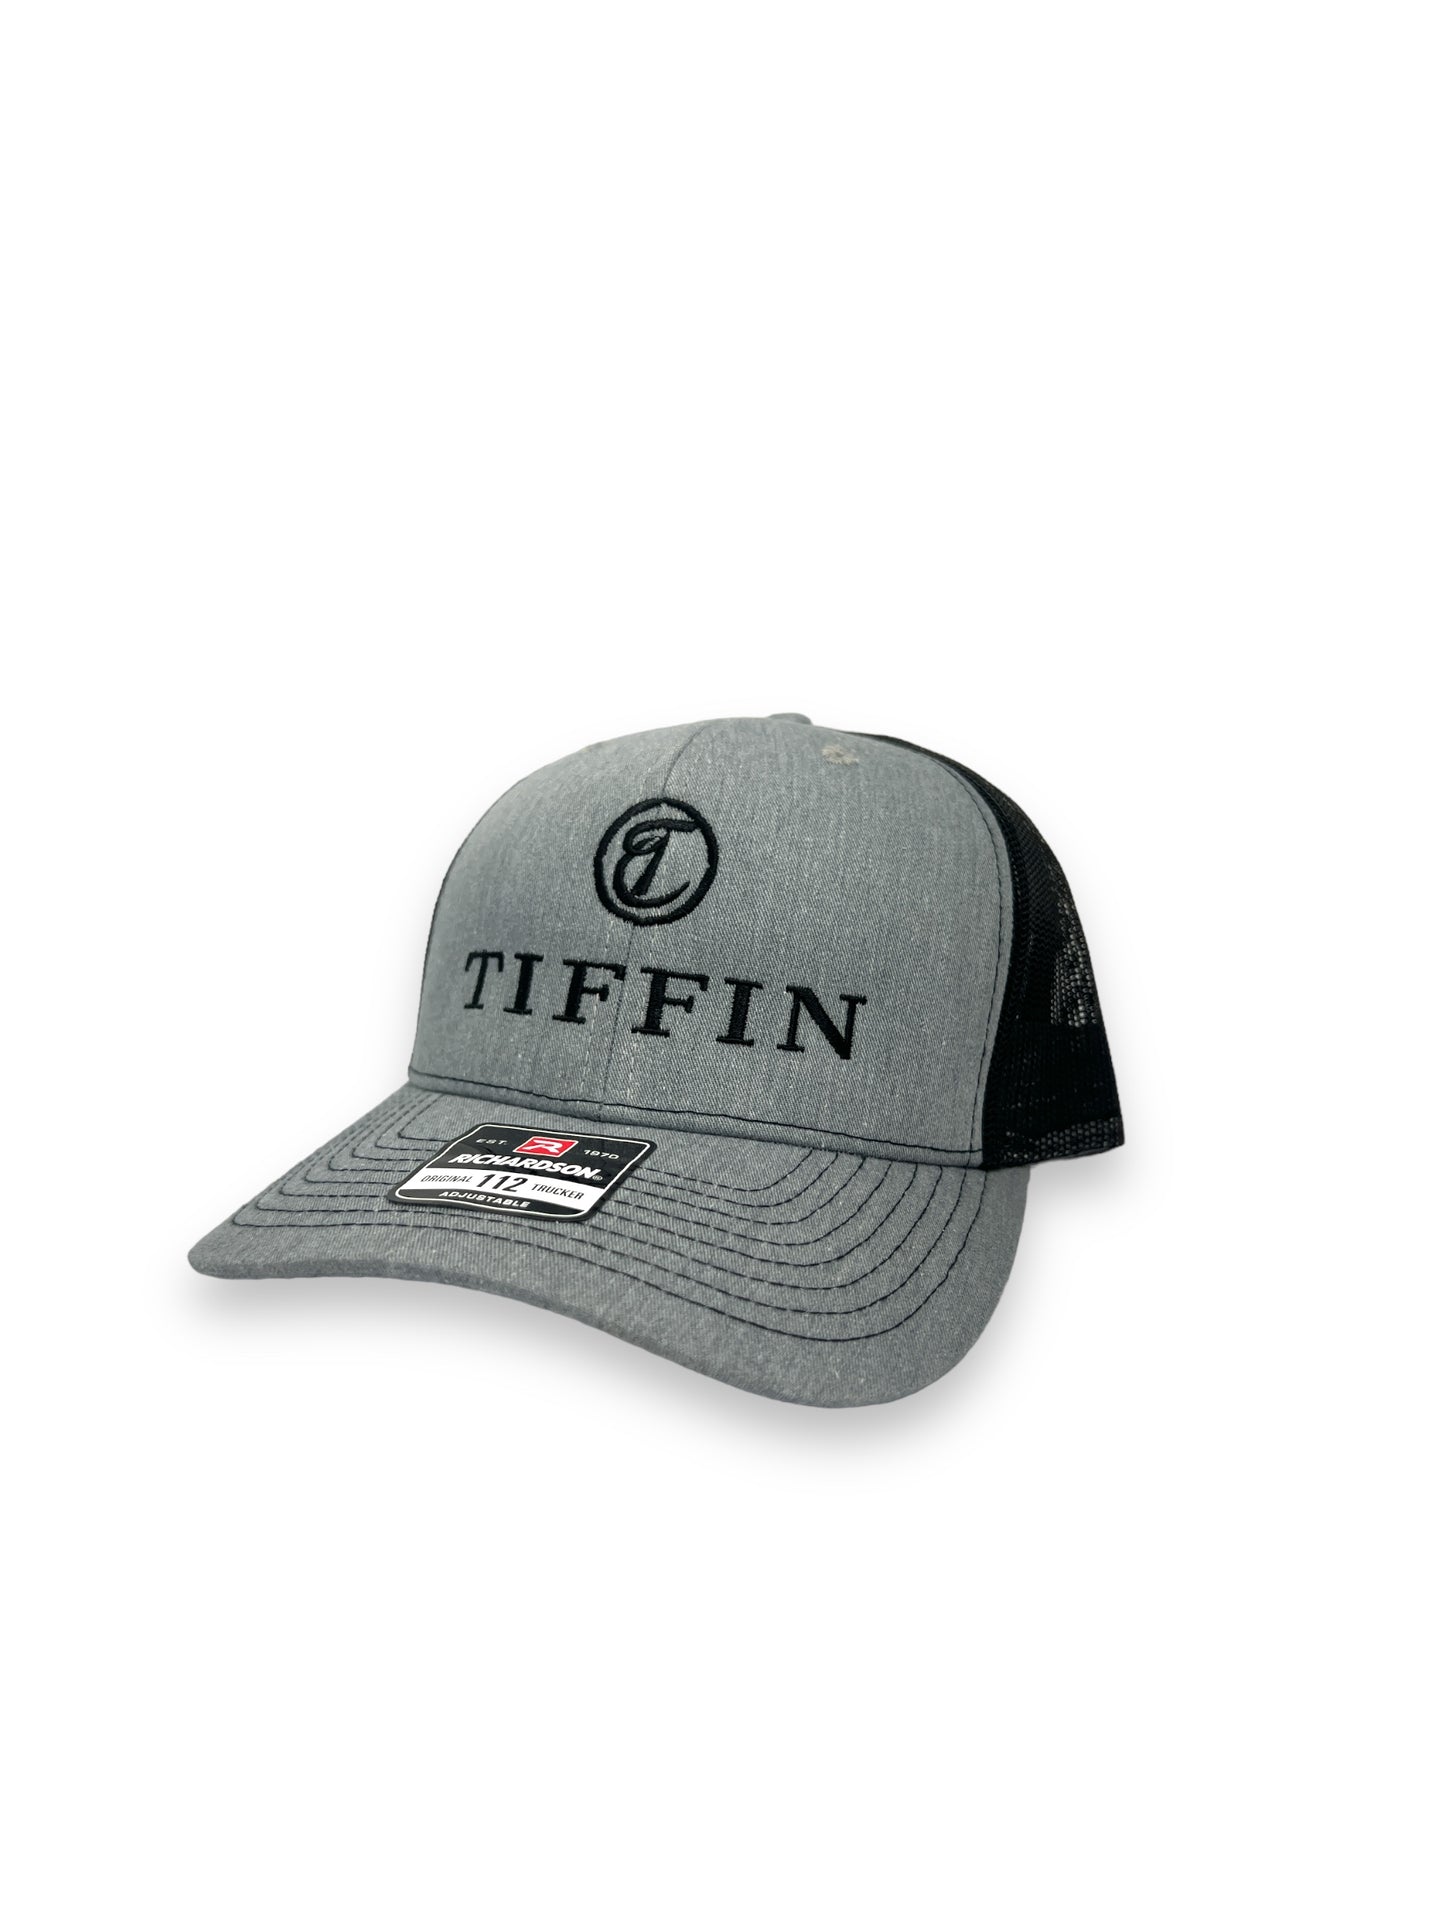 Hat - Tiffin Adjustable